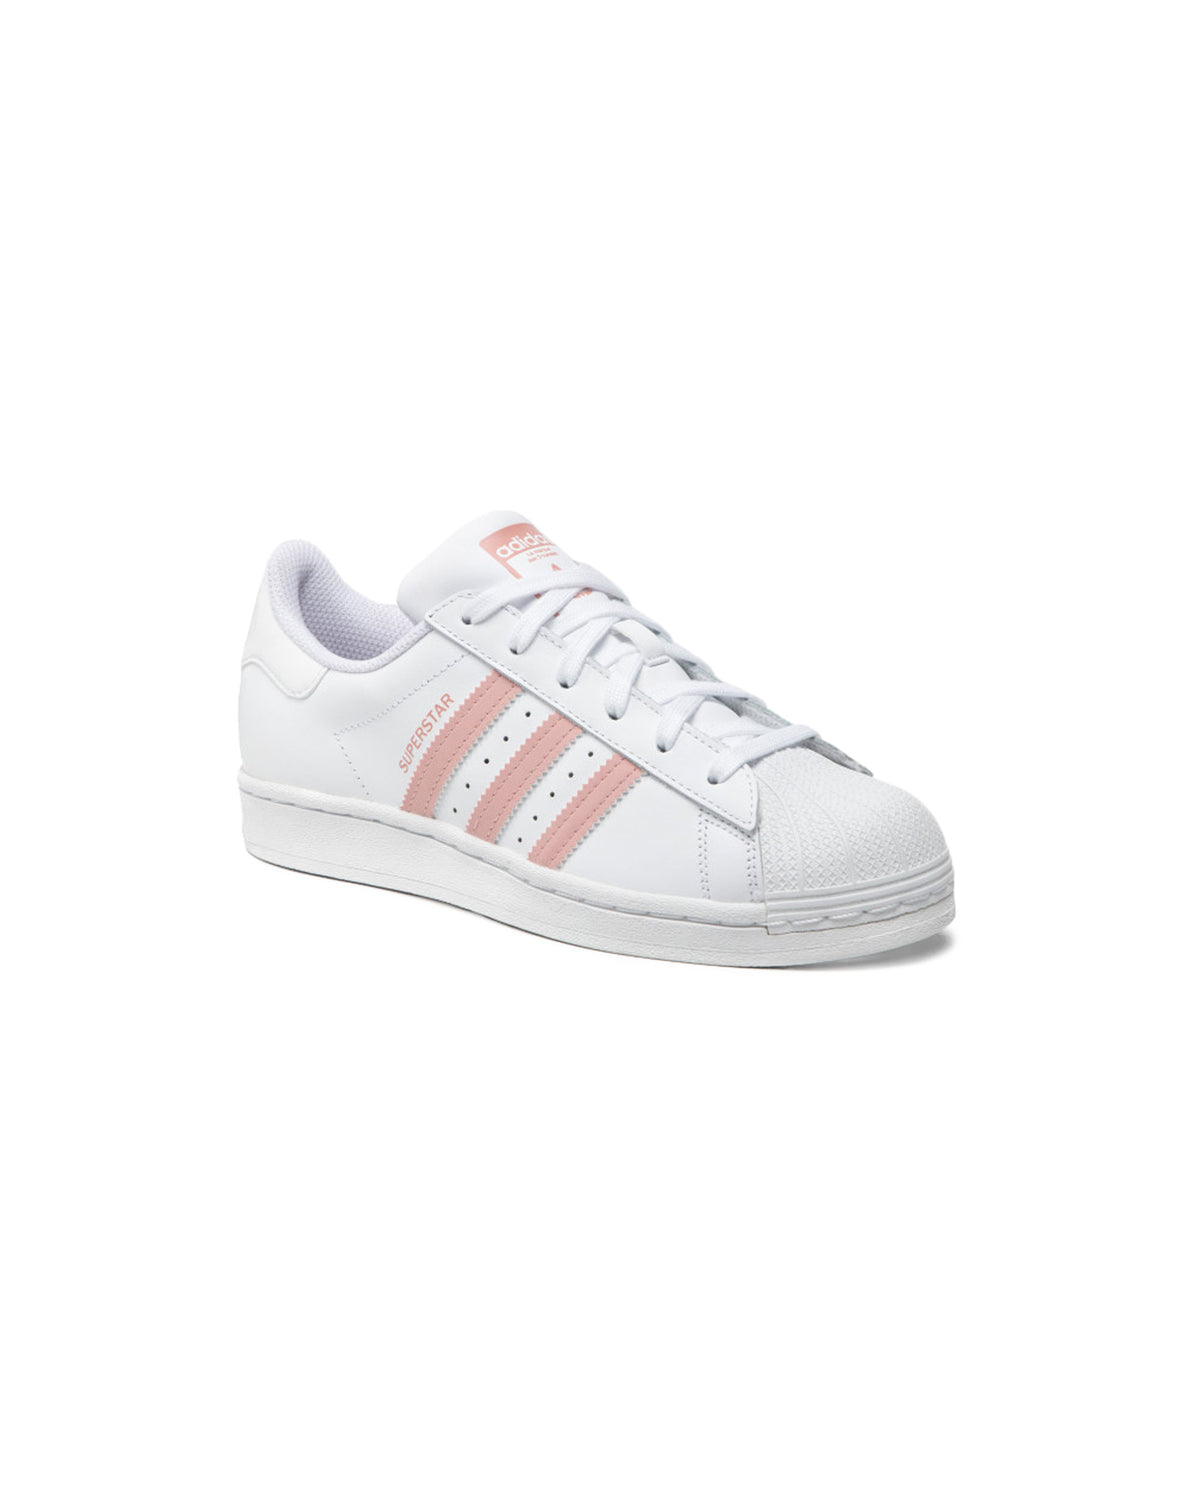 Adidas Superstar j White Pink